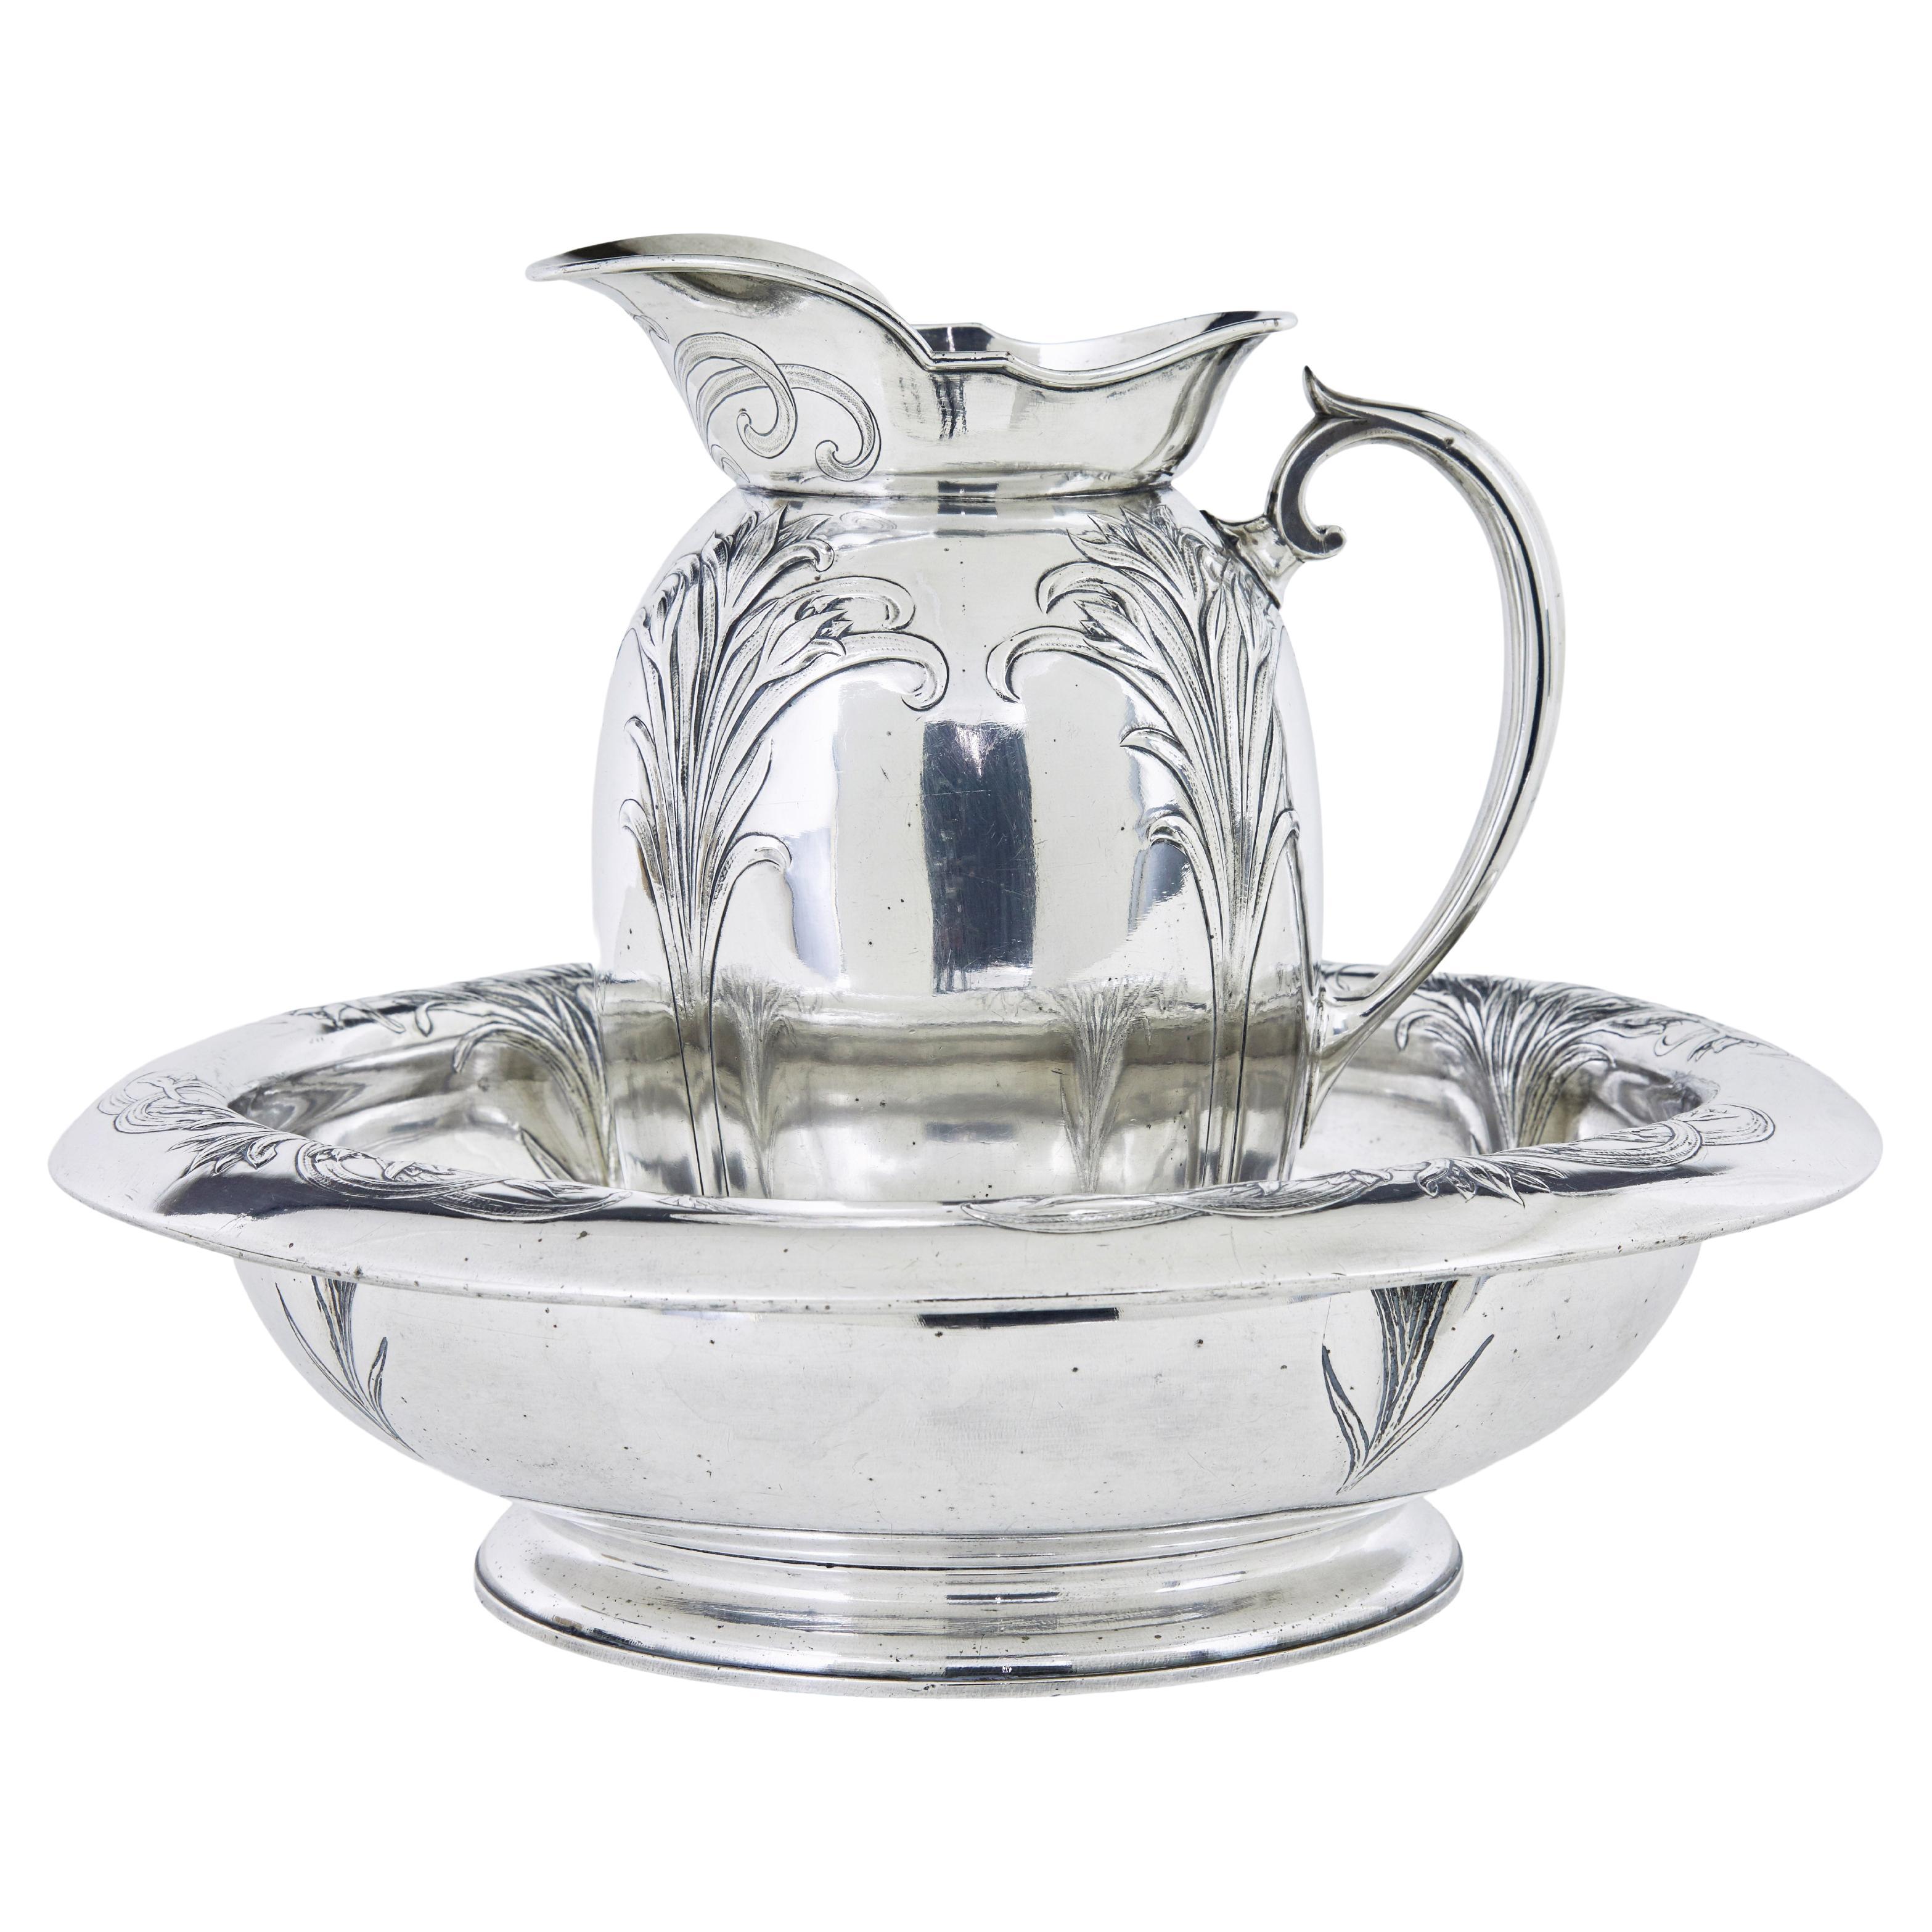 Art nouveau silver plate jug and bowl by Christofle